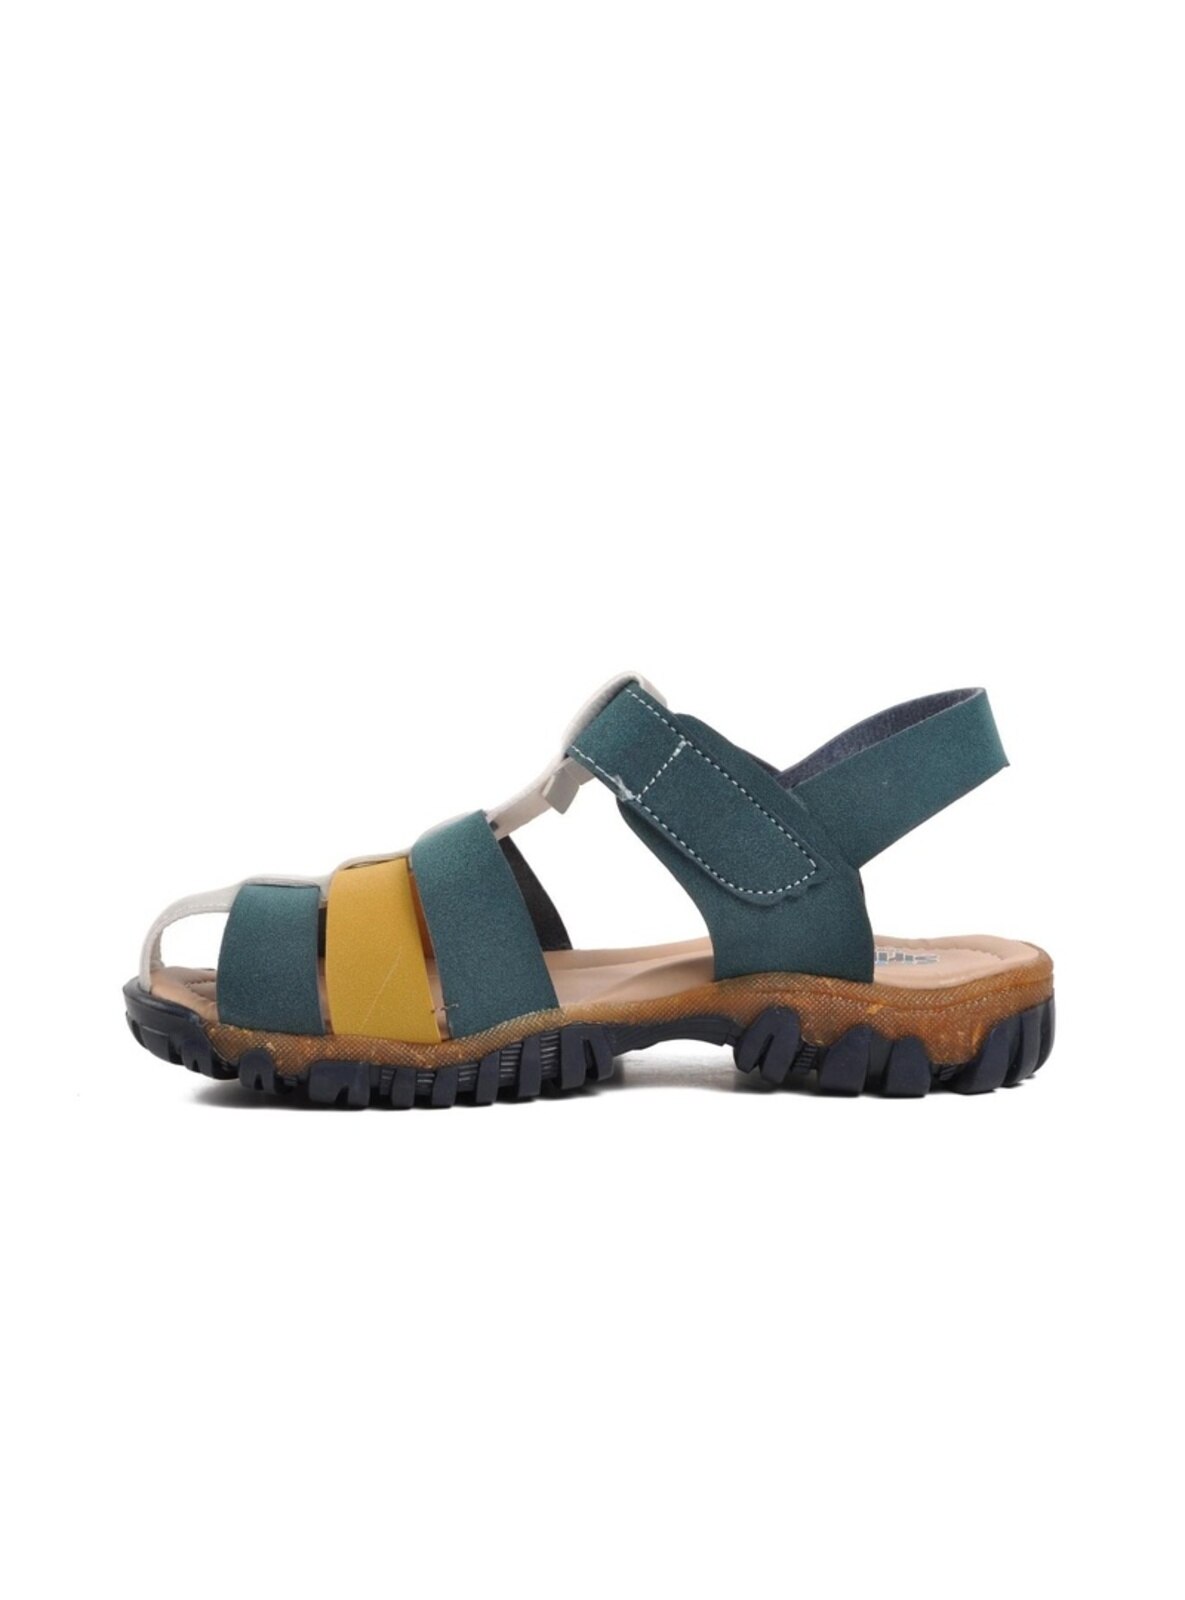 Buy Sandals for kids SS 641 - Sandals Slippers for Kids | Relaxo